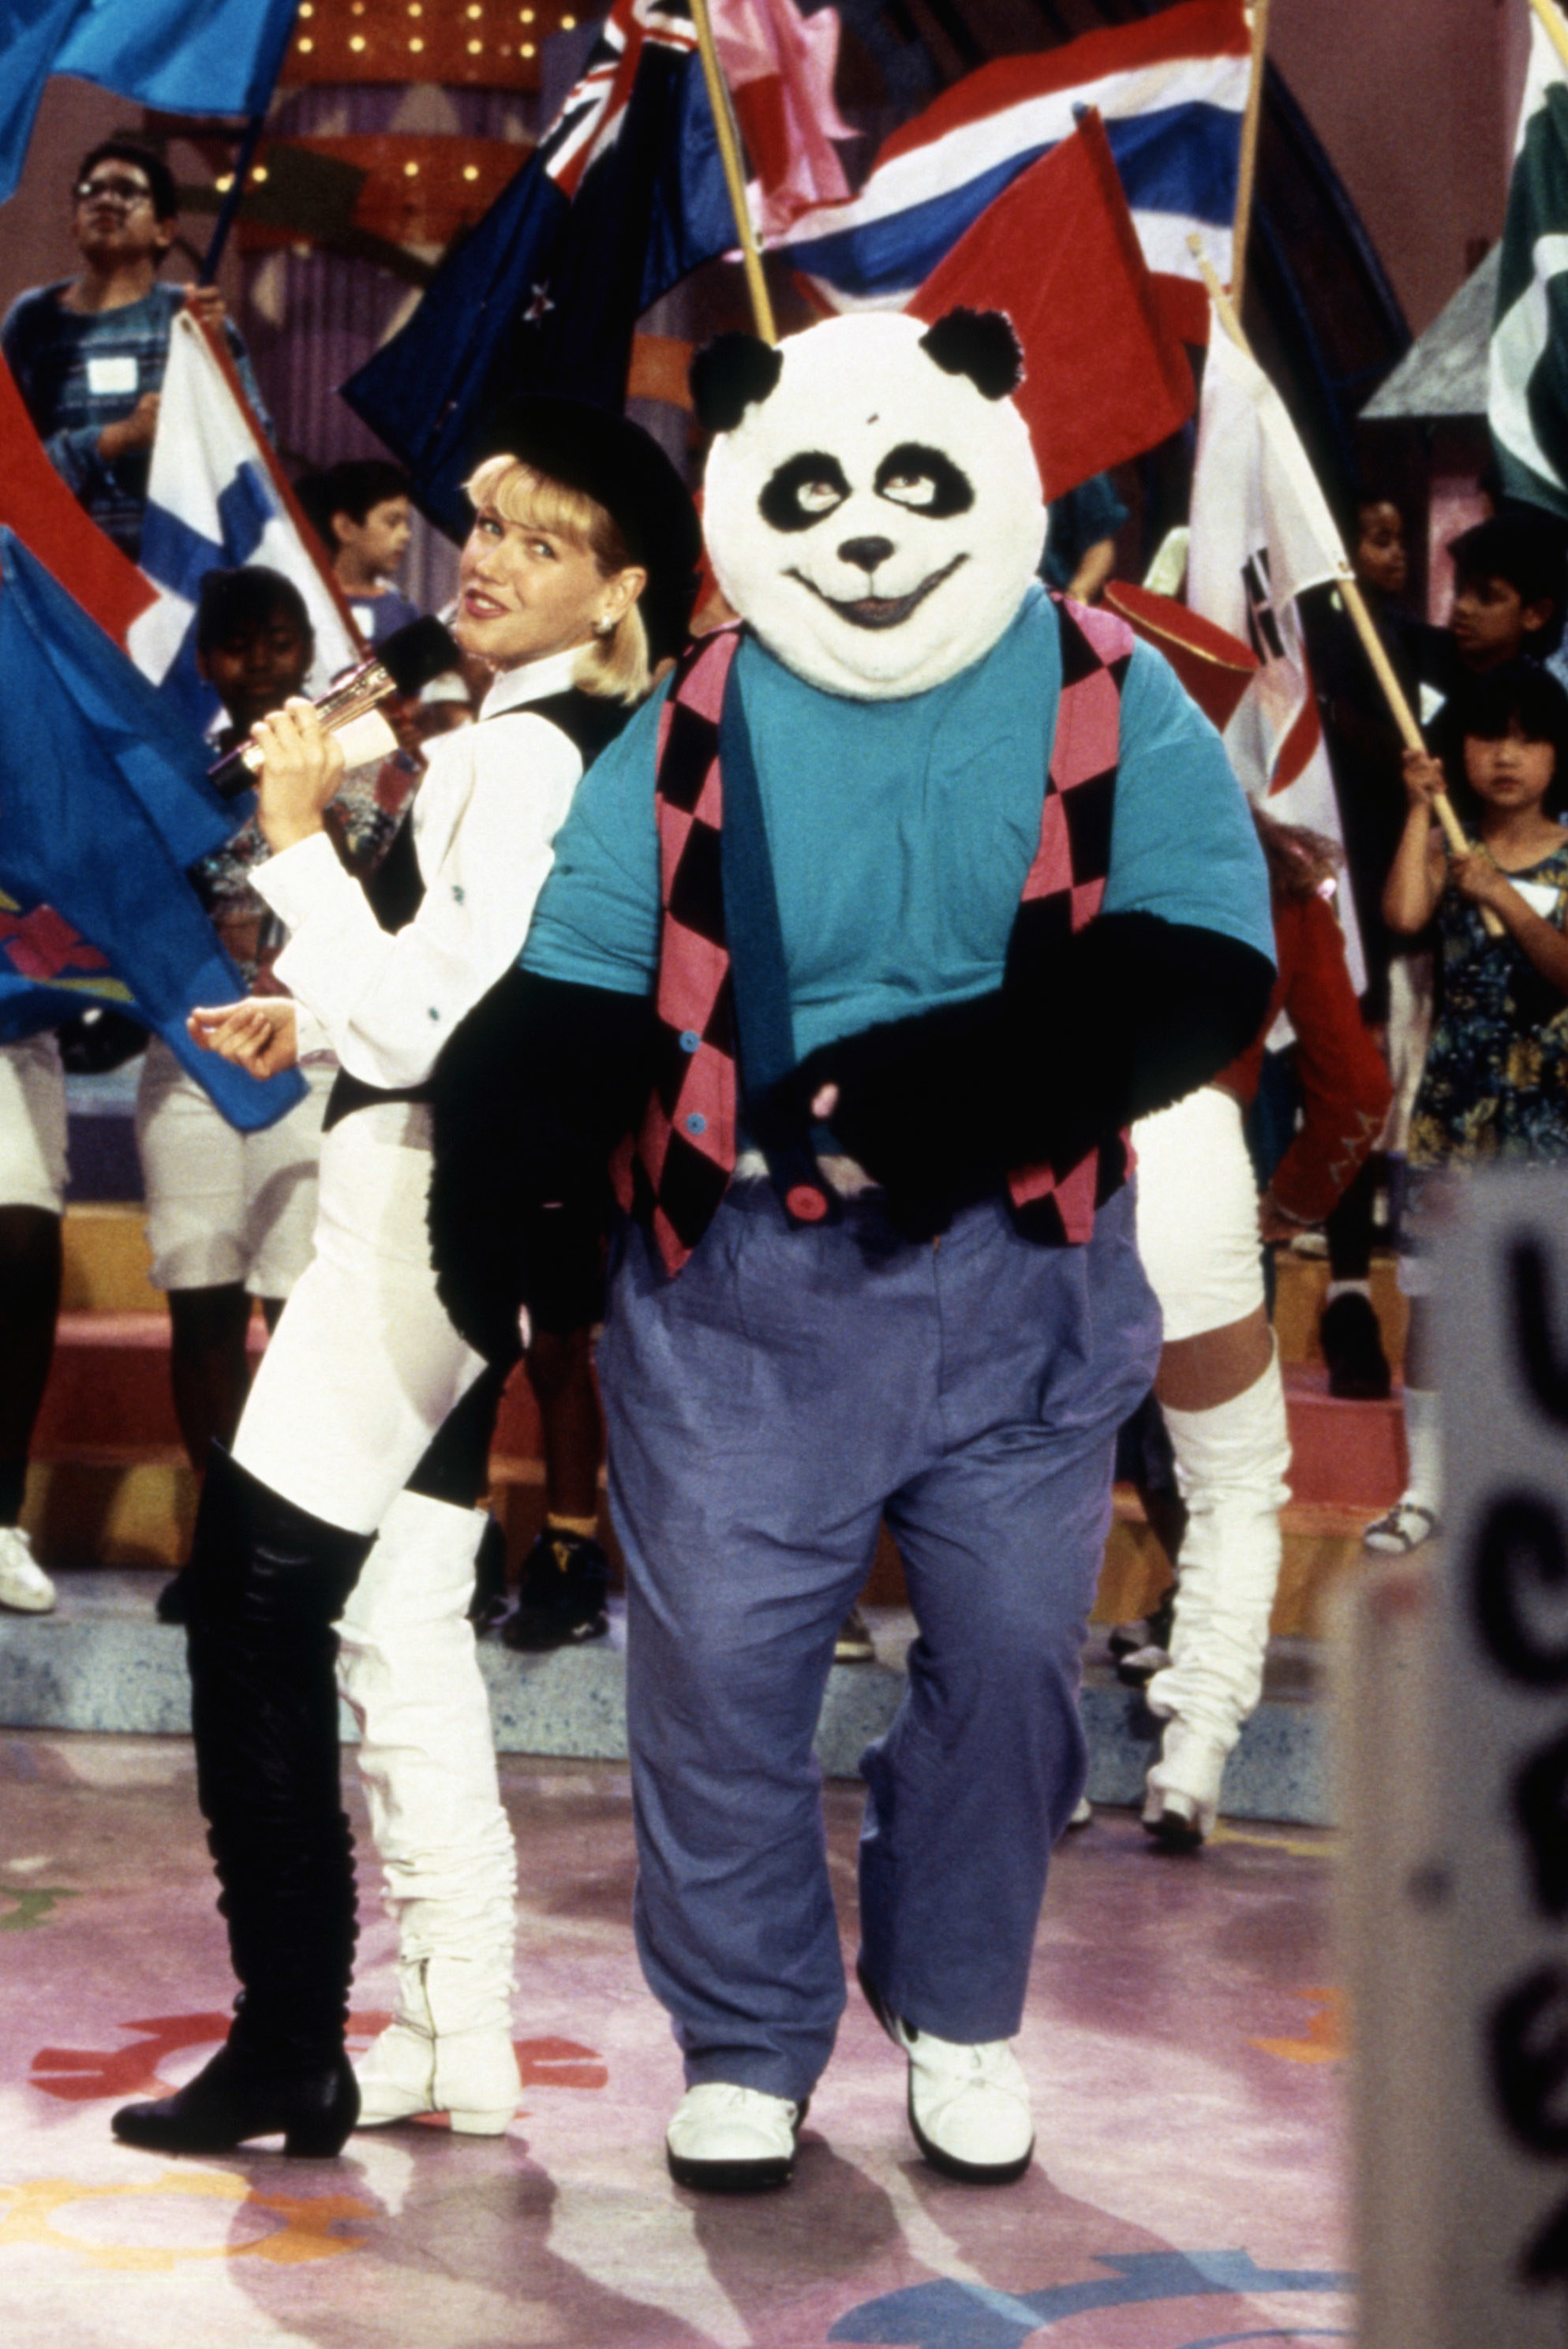 people dancing with a panda mascot